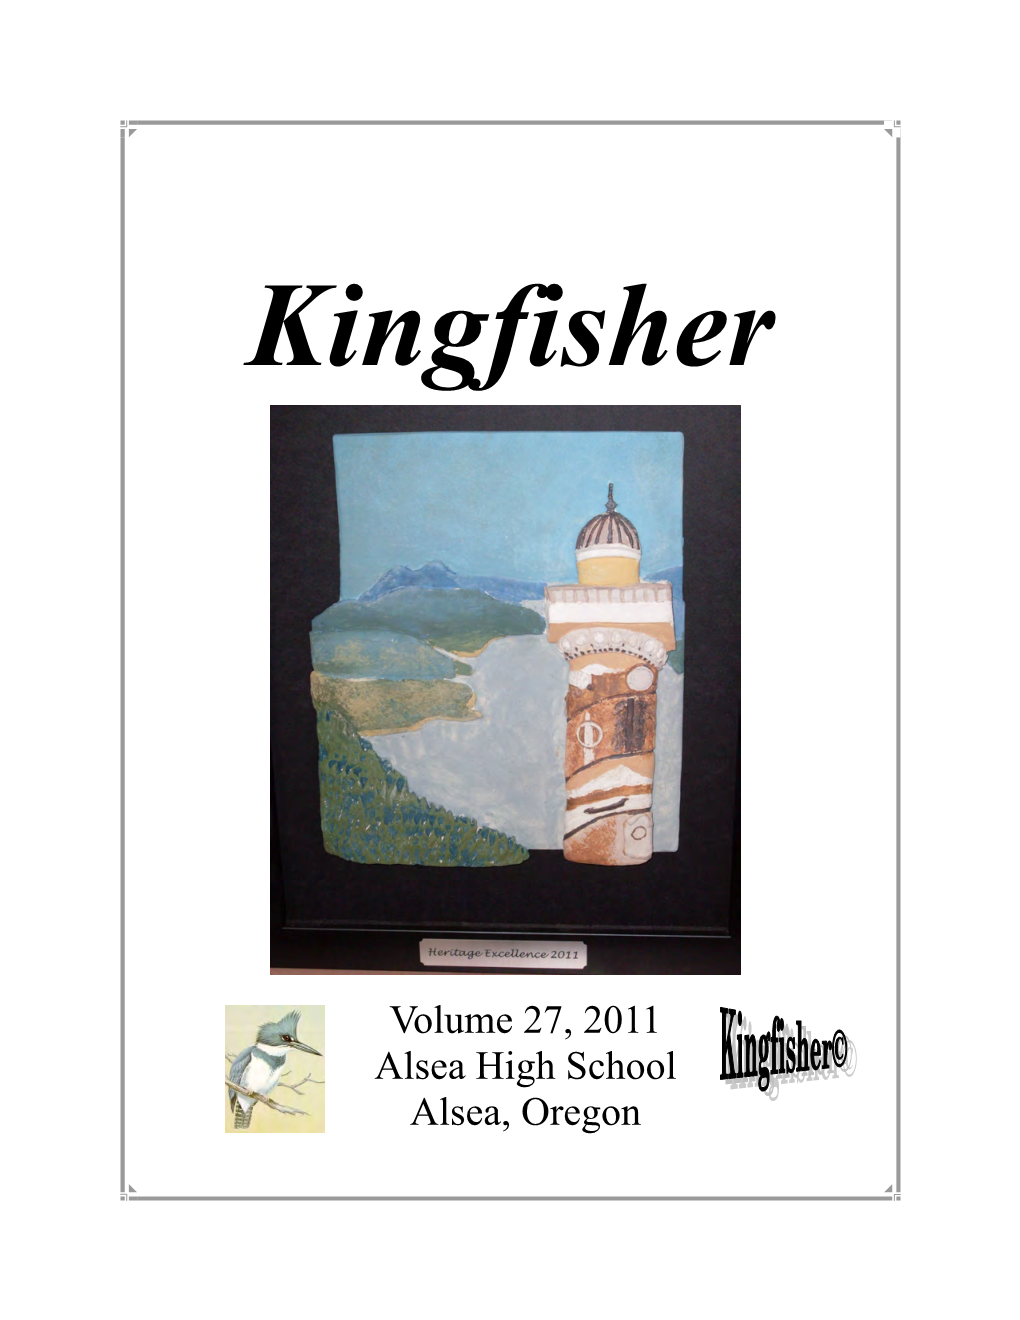 Kingfisher Magazine Volume 27, 2011